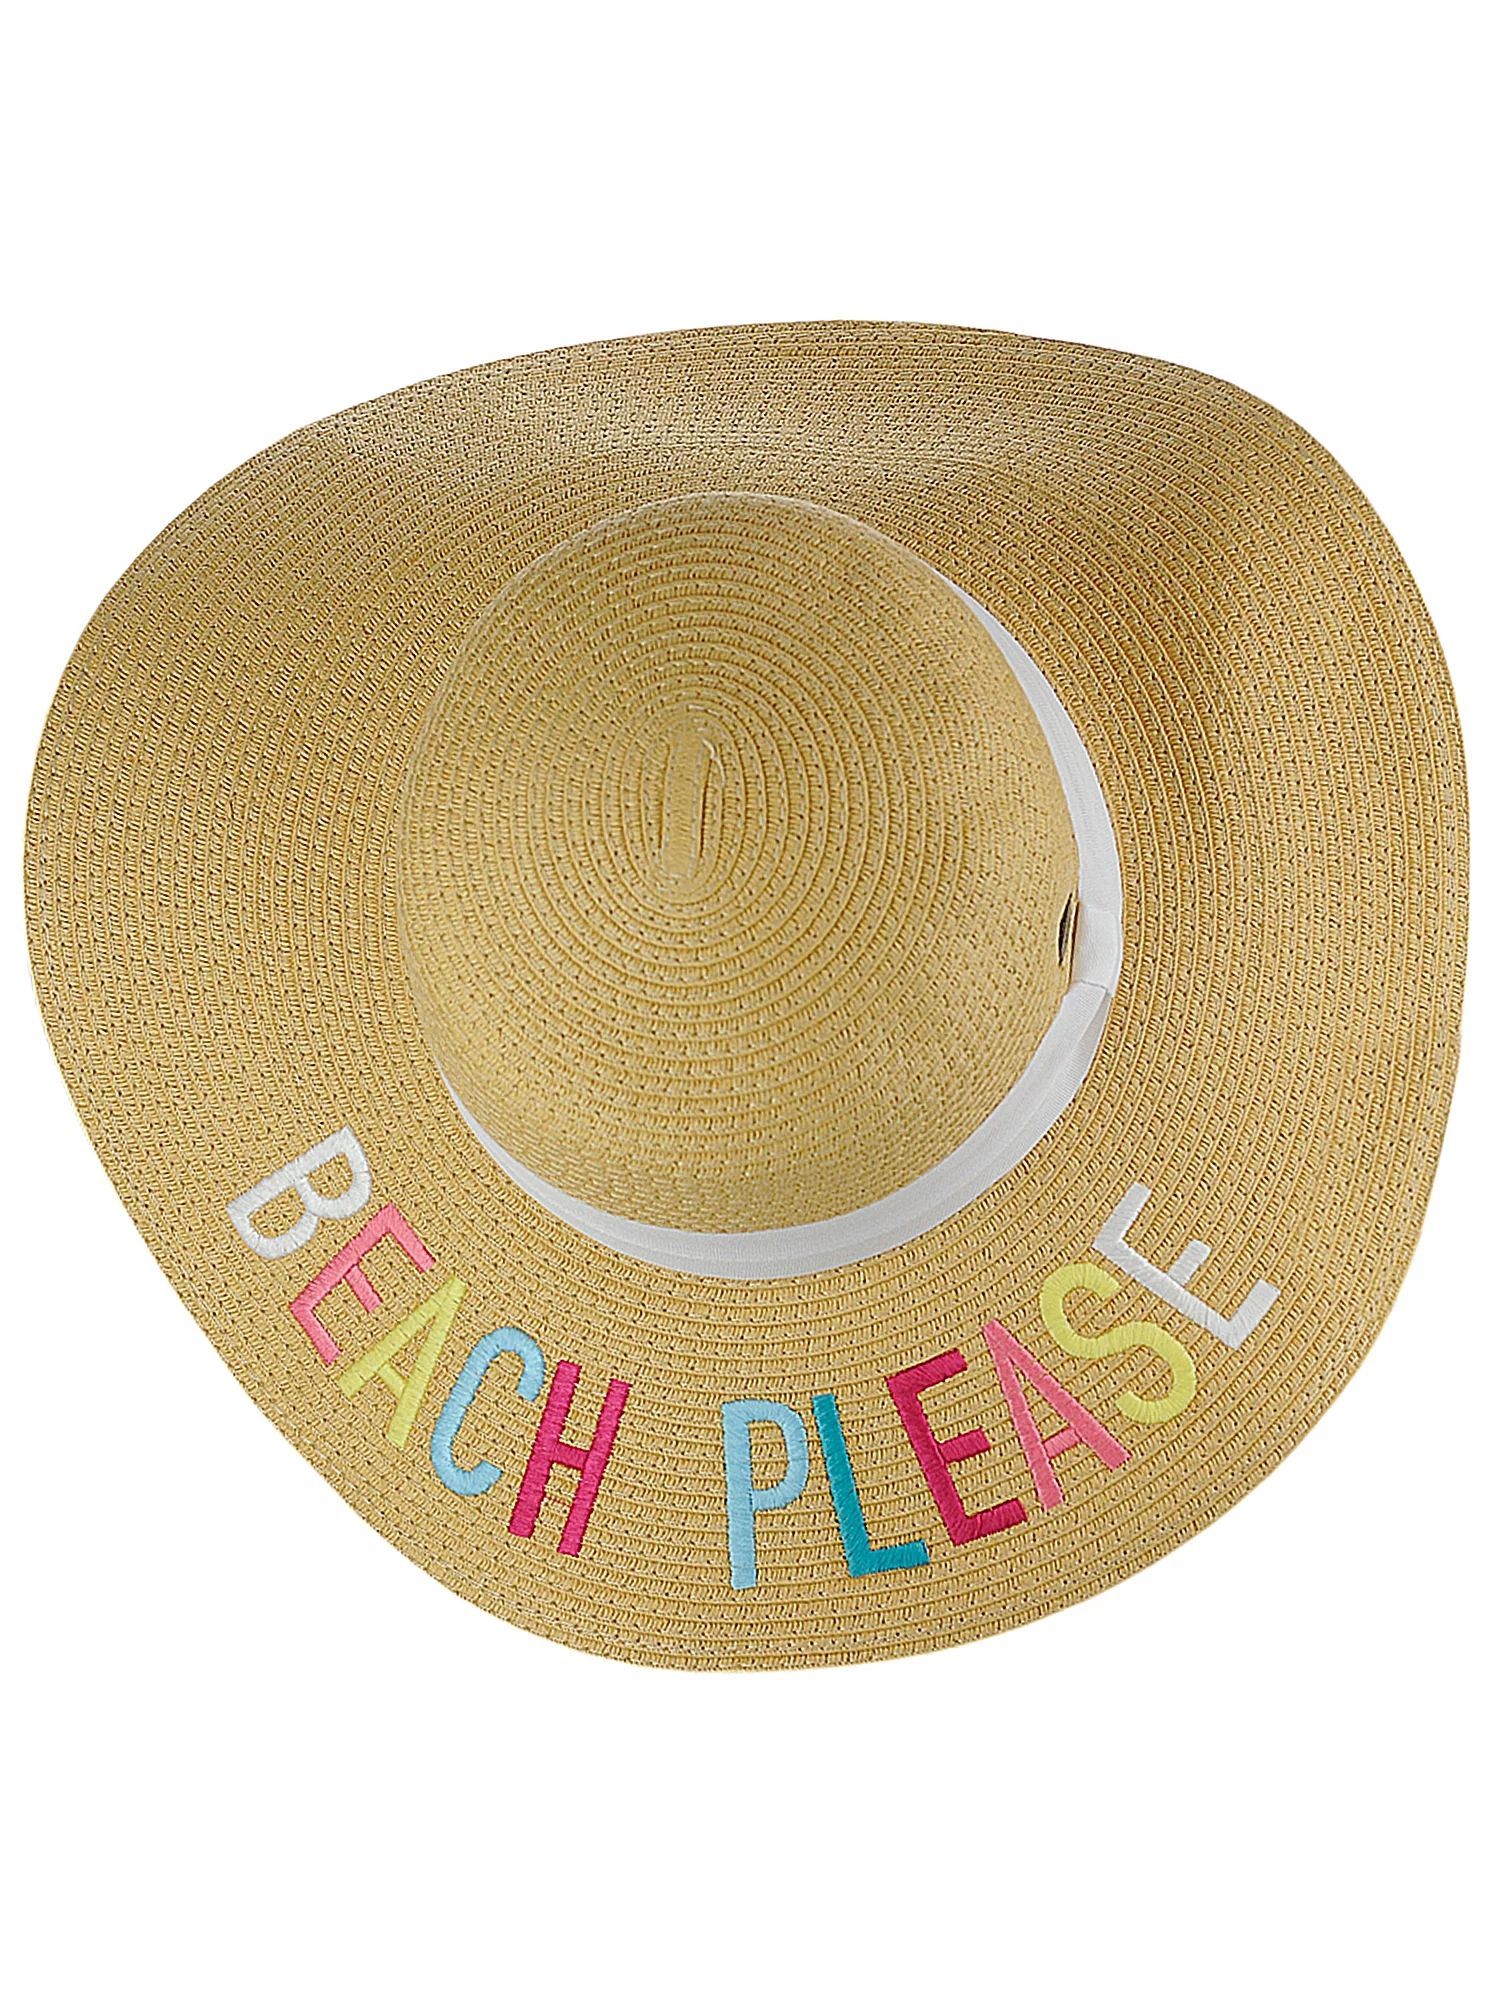 C.C Women's Paper Weaved Crushable Beach Embroidered Quote Floppy Brim Sun Hat, Beach Please in M... | Walmart (US)